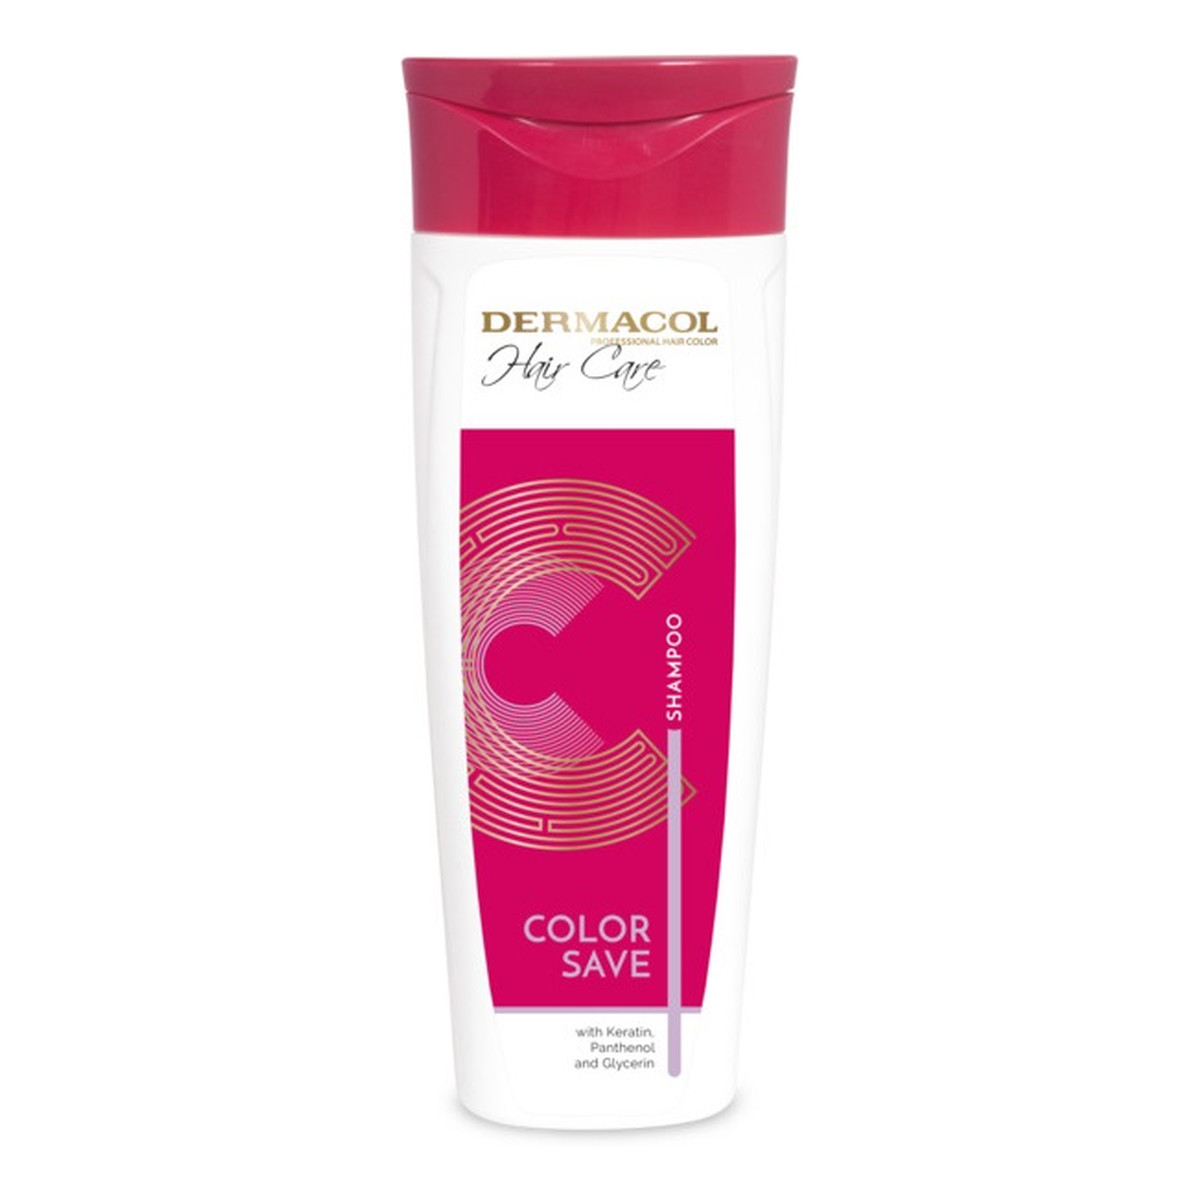 Dermacol Hair care color save szampon do włosów 250ml